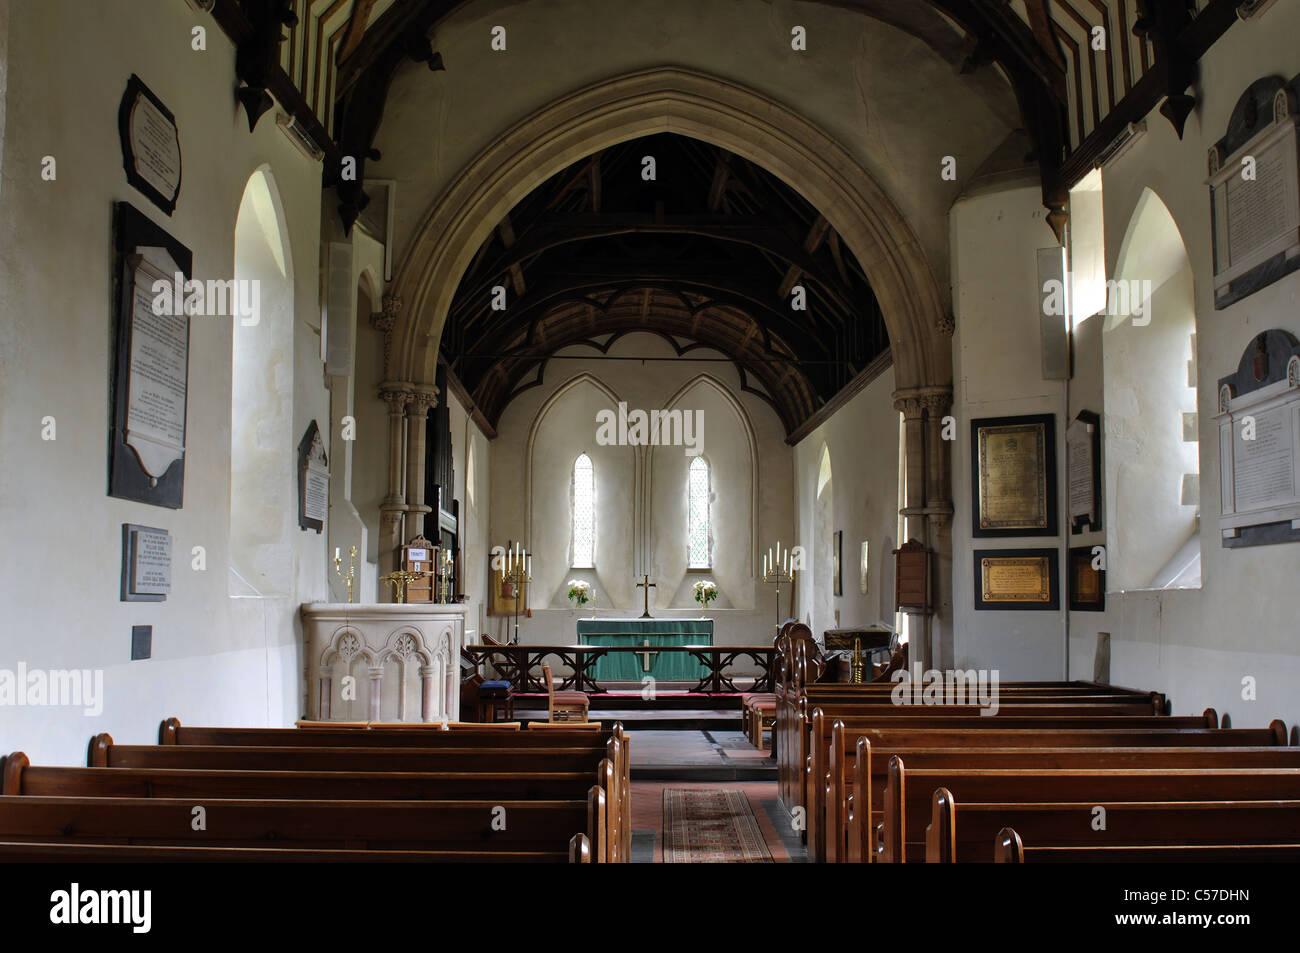 St. Mary and St. Nicholas Church, Hampstead Norreys, Berkshire, England, UK Stock Photo